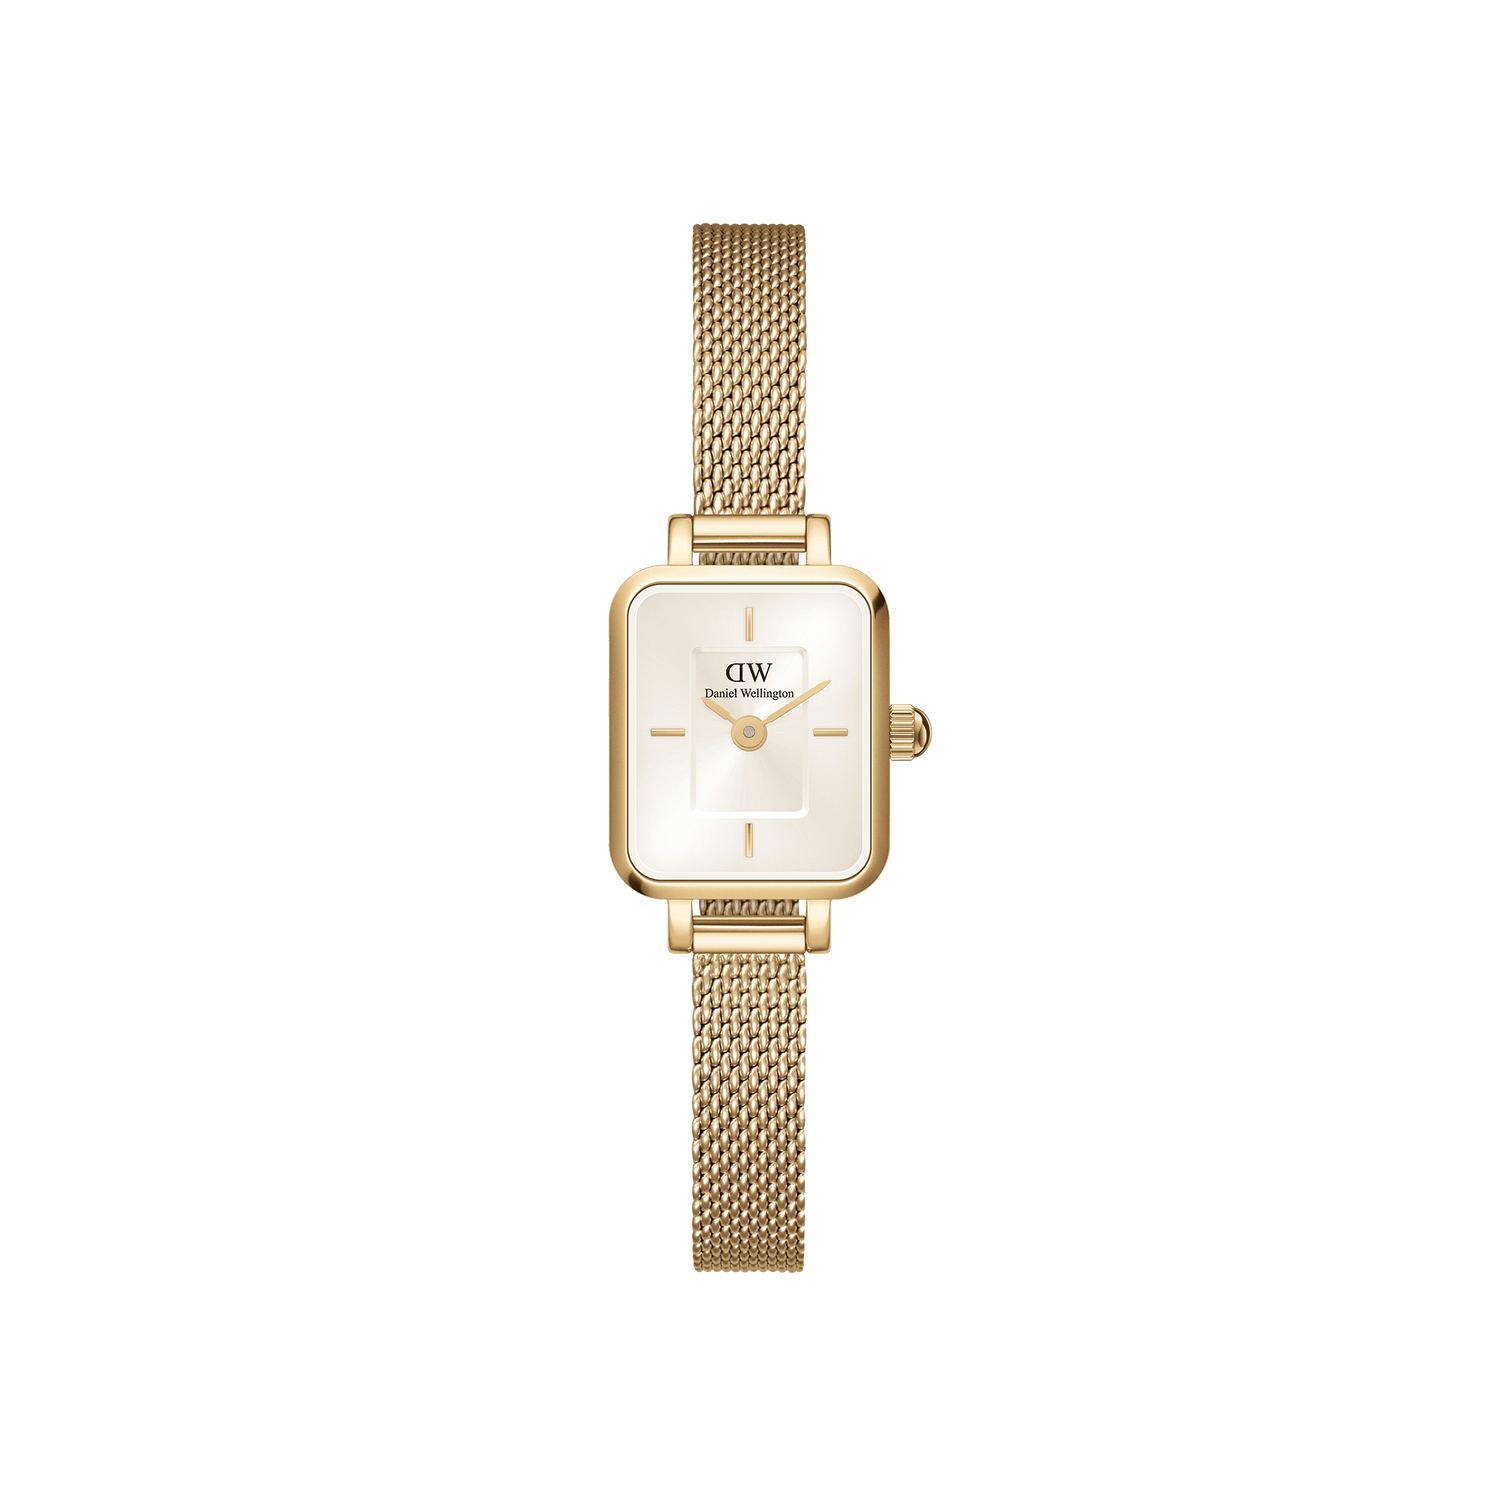 Quadro Mini - Uhr mit goldenem und champagnerfarbenem Zifferblatt